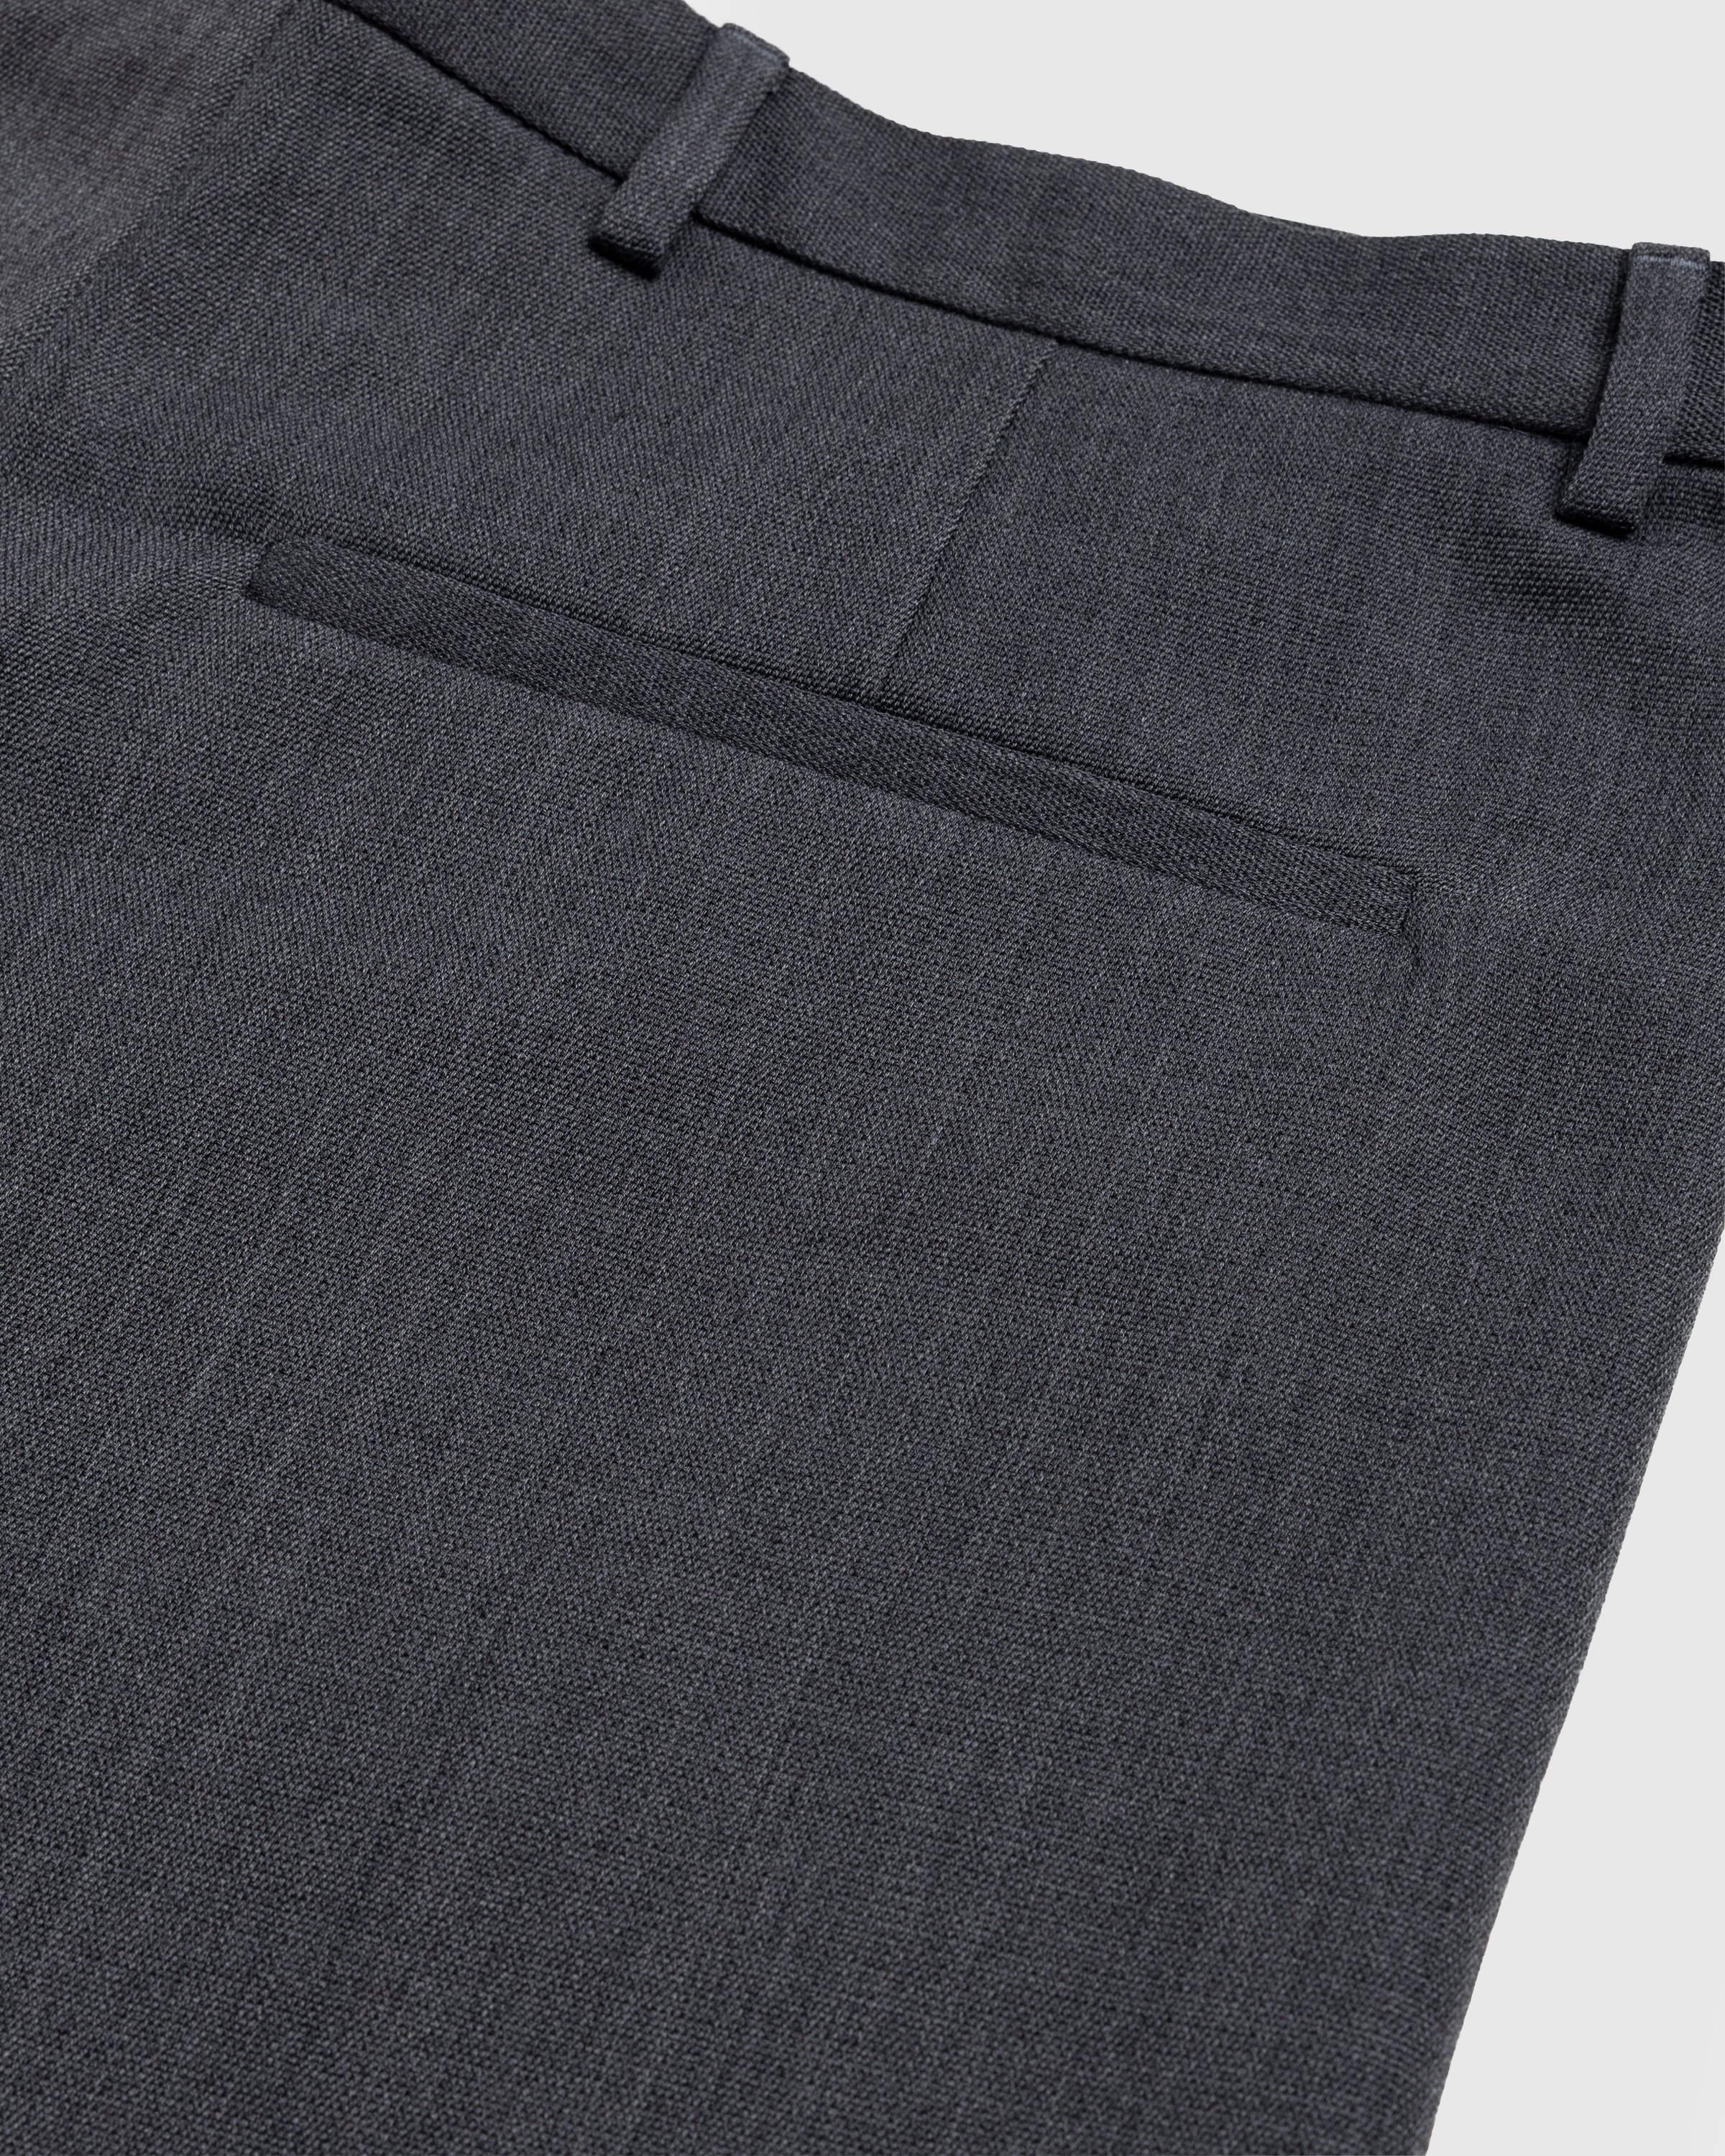 Acne Studios - Wool Blend Tailored Trousers Dark Grey Melange - Clothing - Grey - Image 6